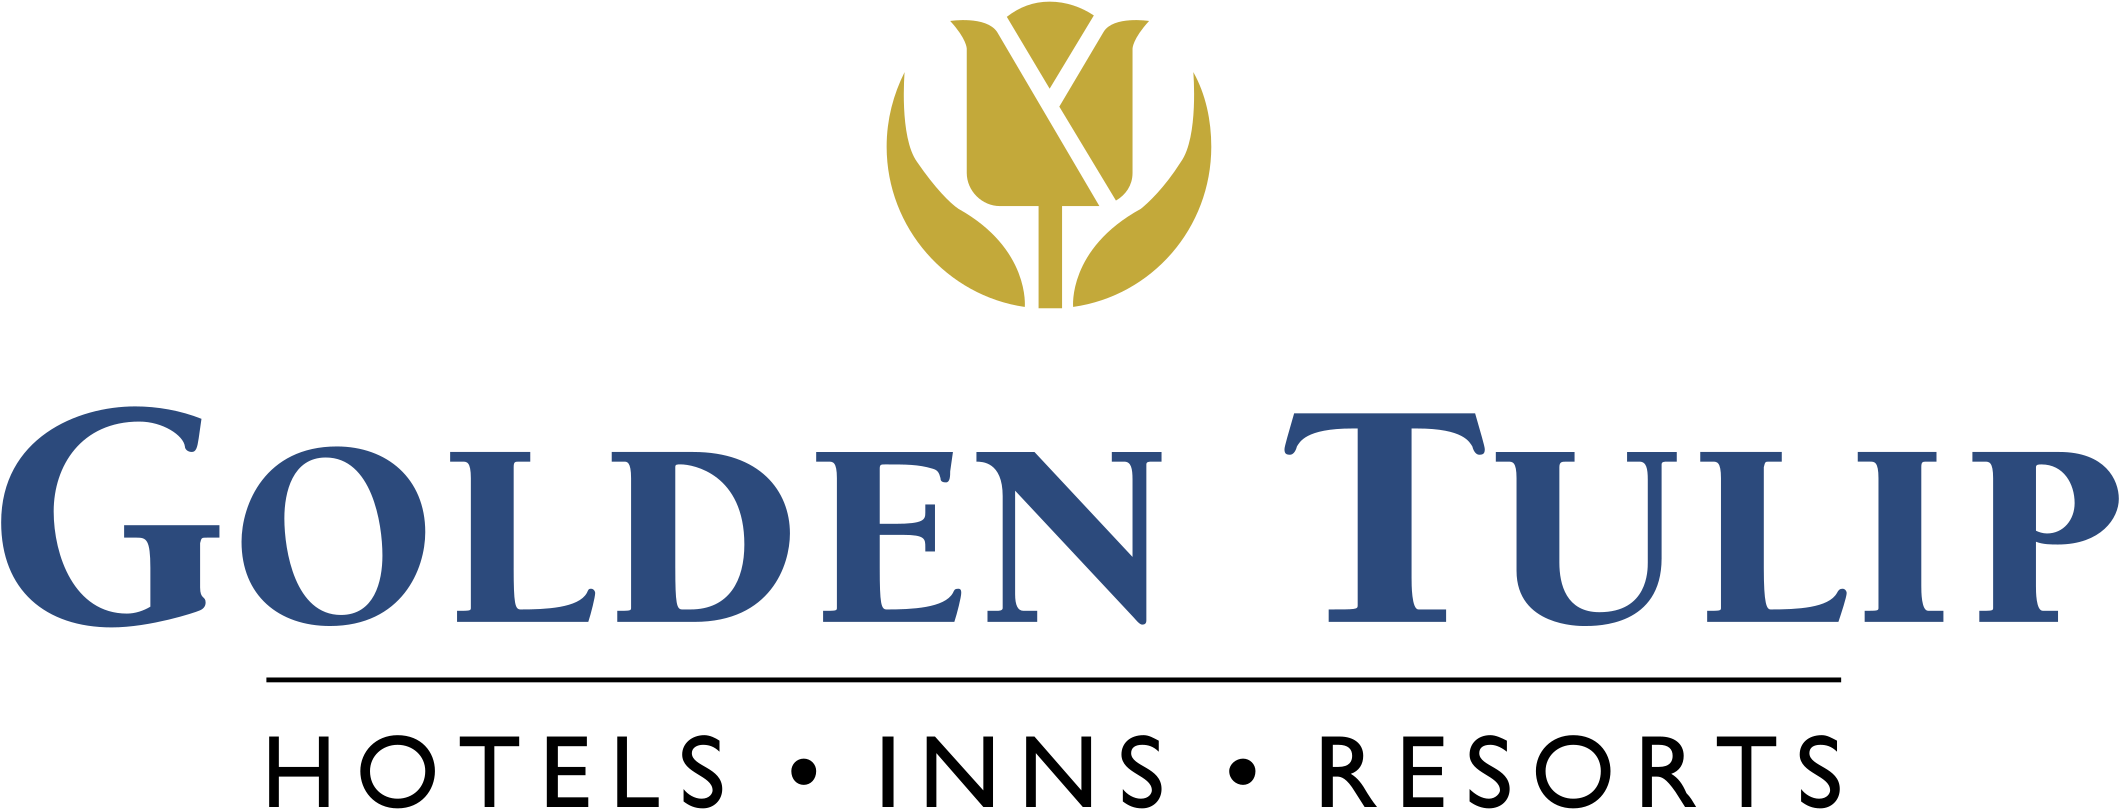 Golden Tulip Logo Png Transparent - Golden Tulip Hotel Logo Clipart (2400x2400), Png Download